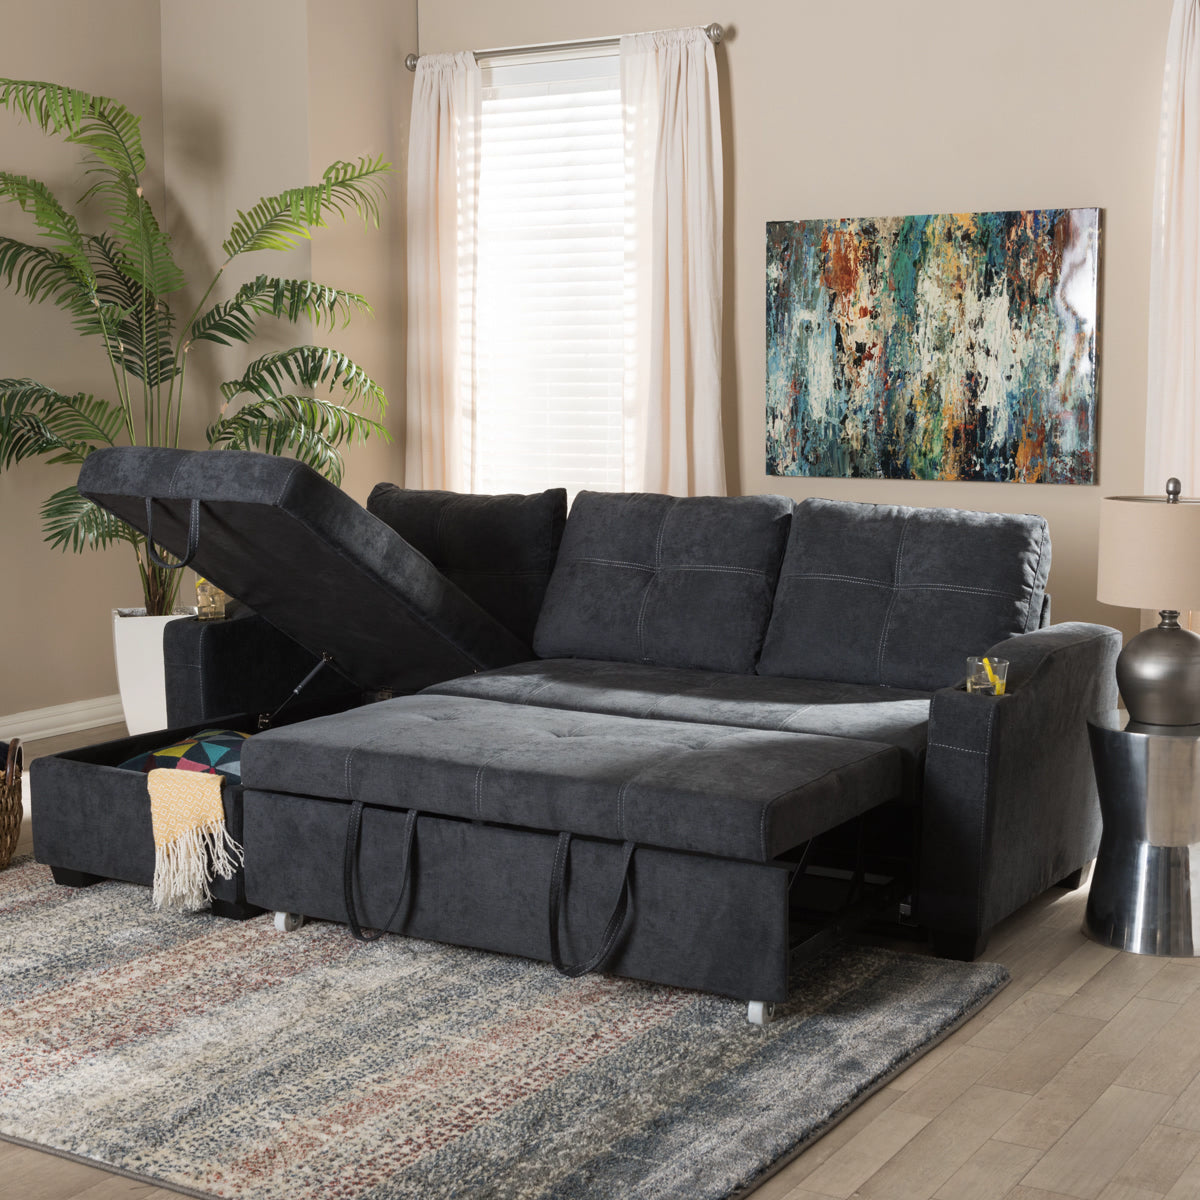 Baxton Studio Lianna Modern and Contemporary Dark Grey Fabric Upholstered Sectional Sofa Baxton Studio-sofas-Minimal And Modern - 6